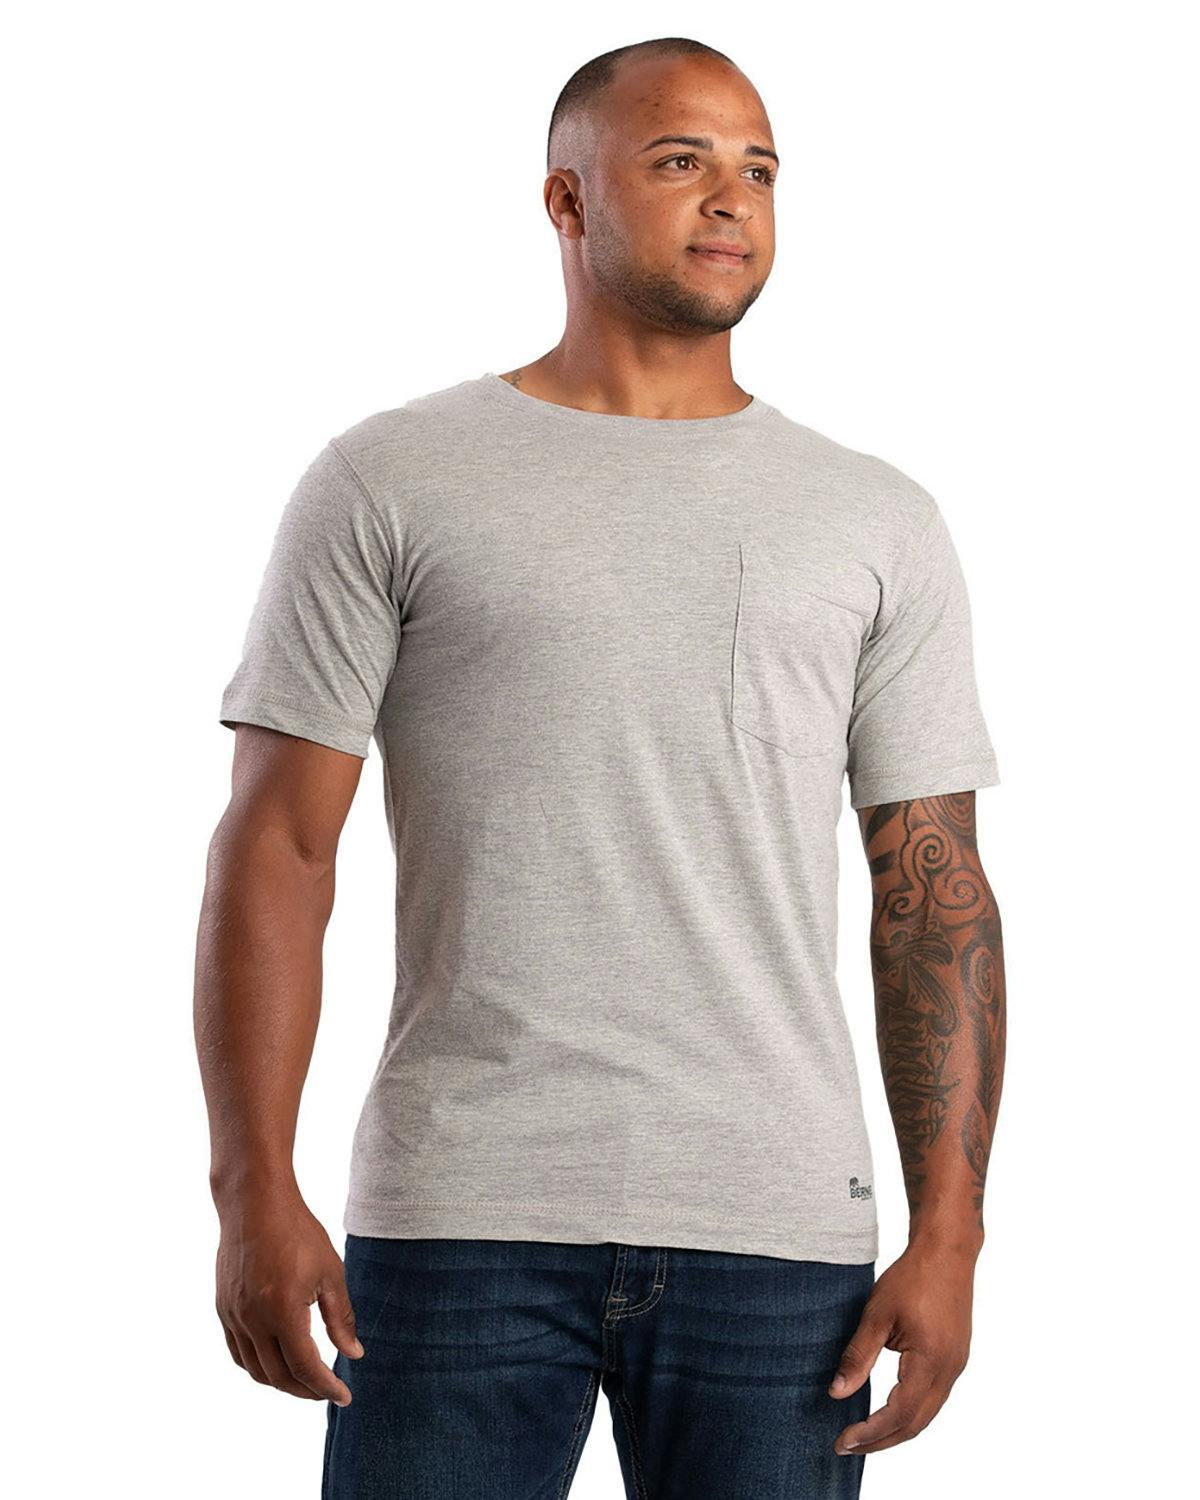 Image for Men's Lightweight Performance T-Shirt